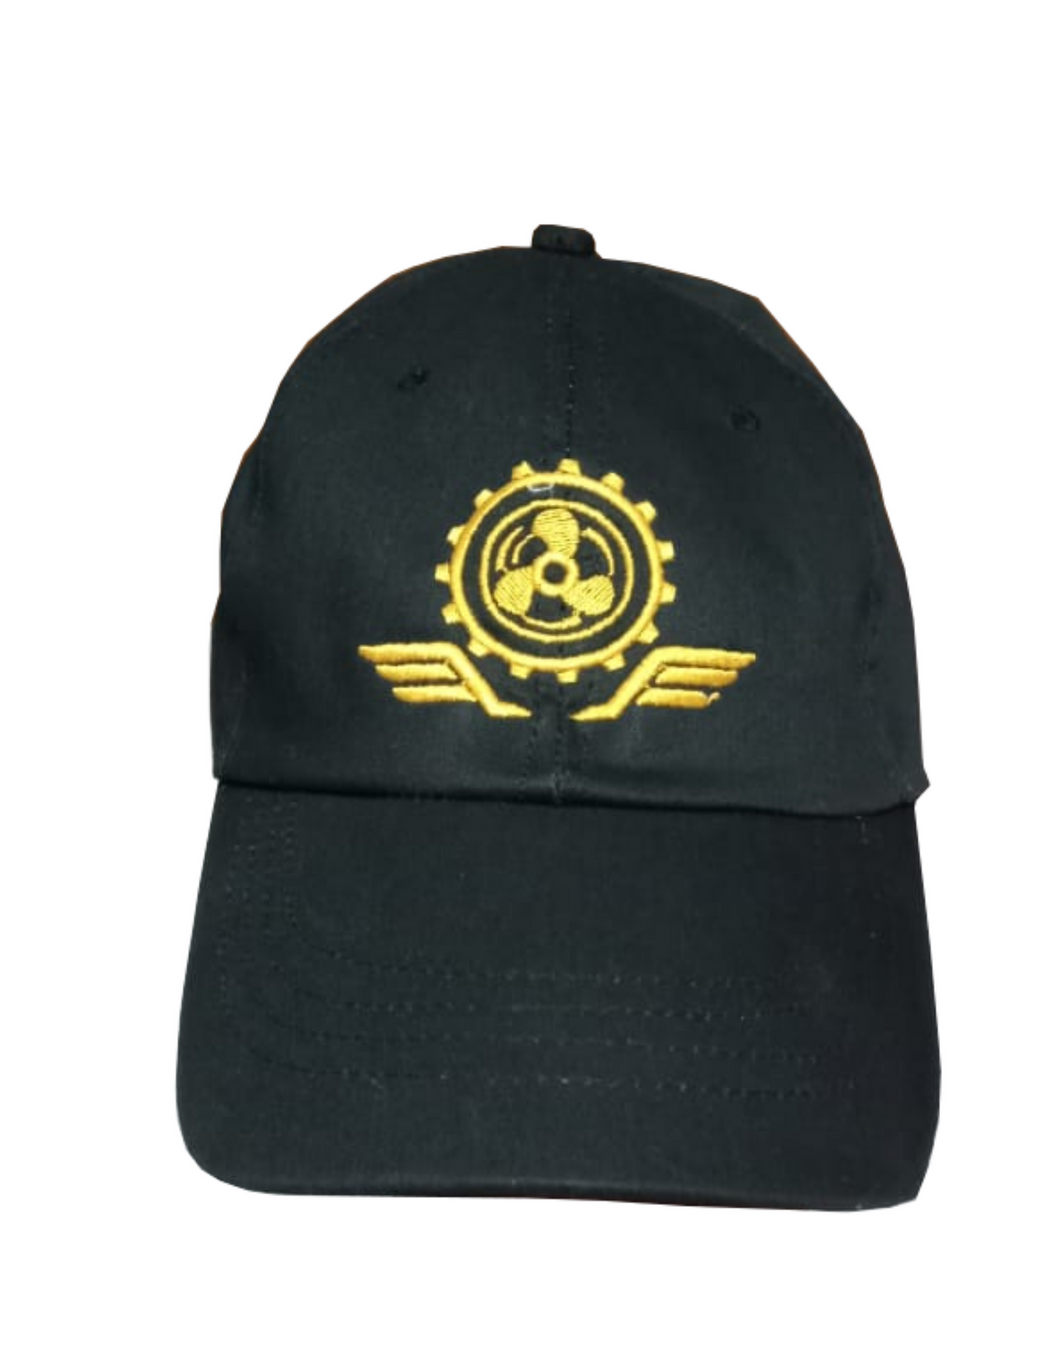 Marine Engineers Logo Embroidered Black Adult Unisex Cap - Premium Quality